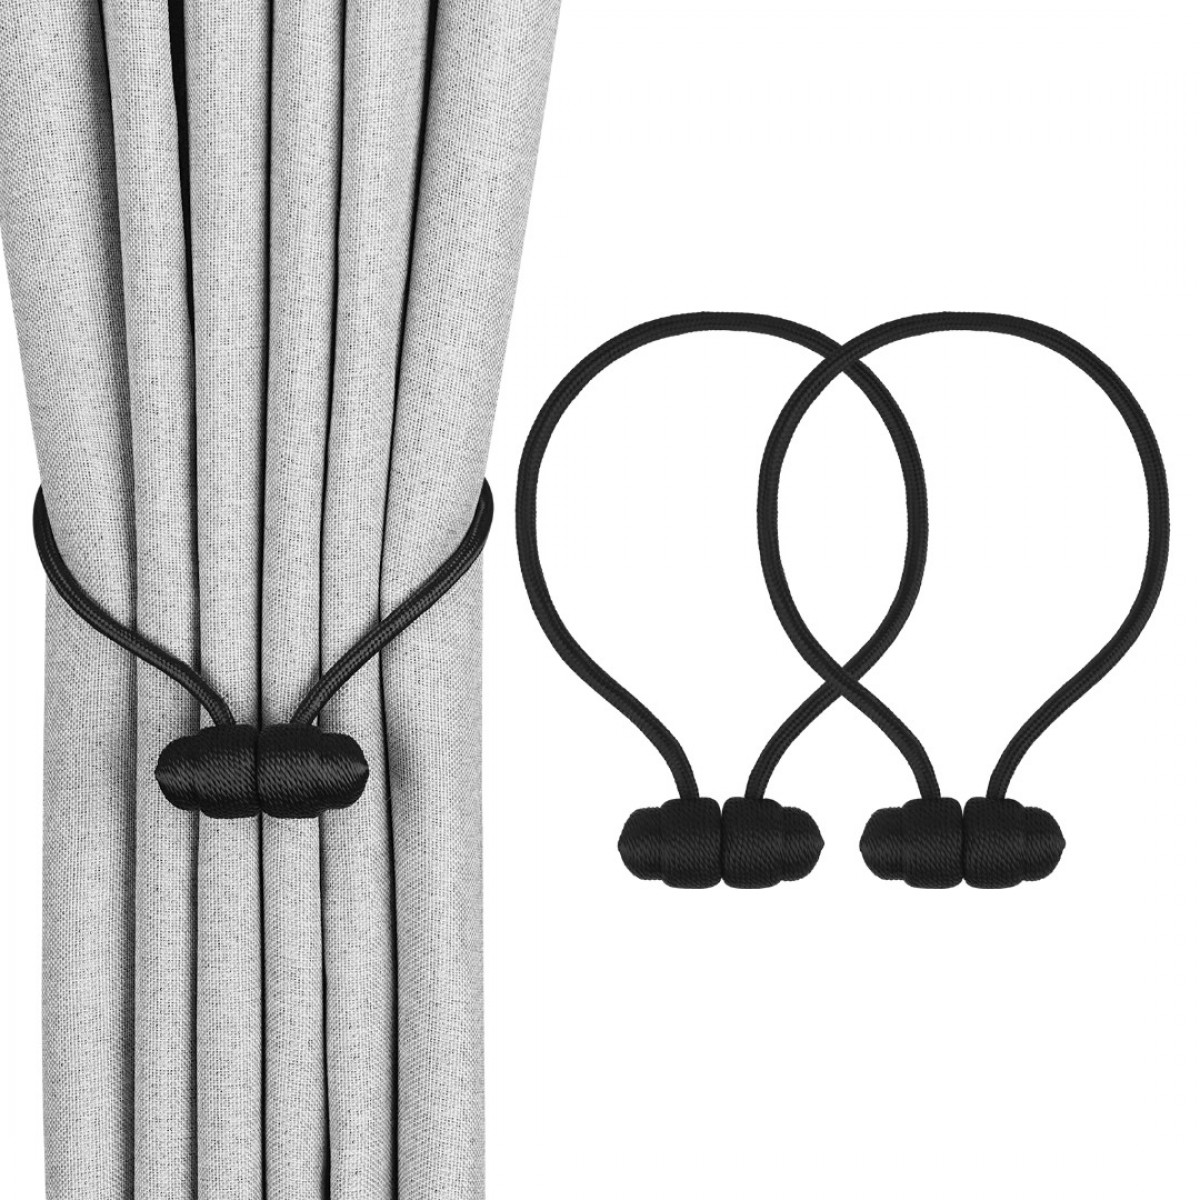 Ohtomber Black Magnetic Curtain Tiebacks - 2 Pack Curtain Tie Backs for Curtains, Strong Curtain Tie